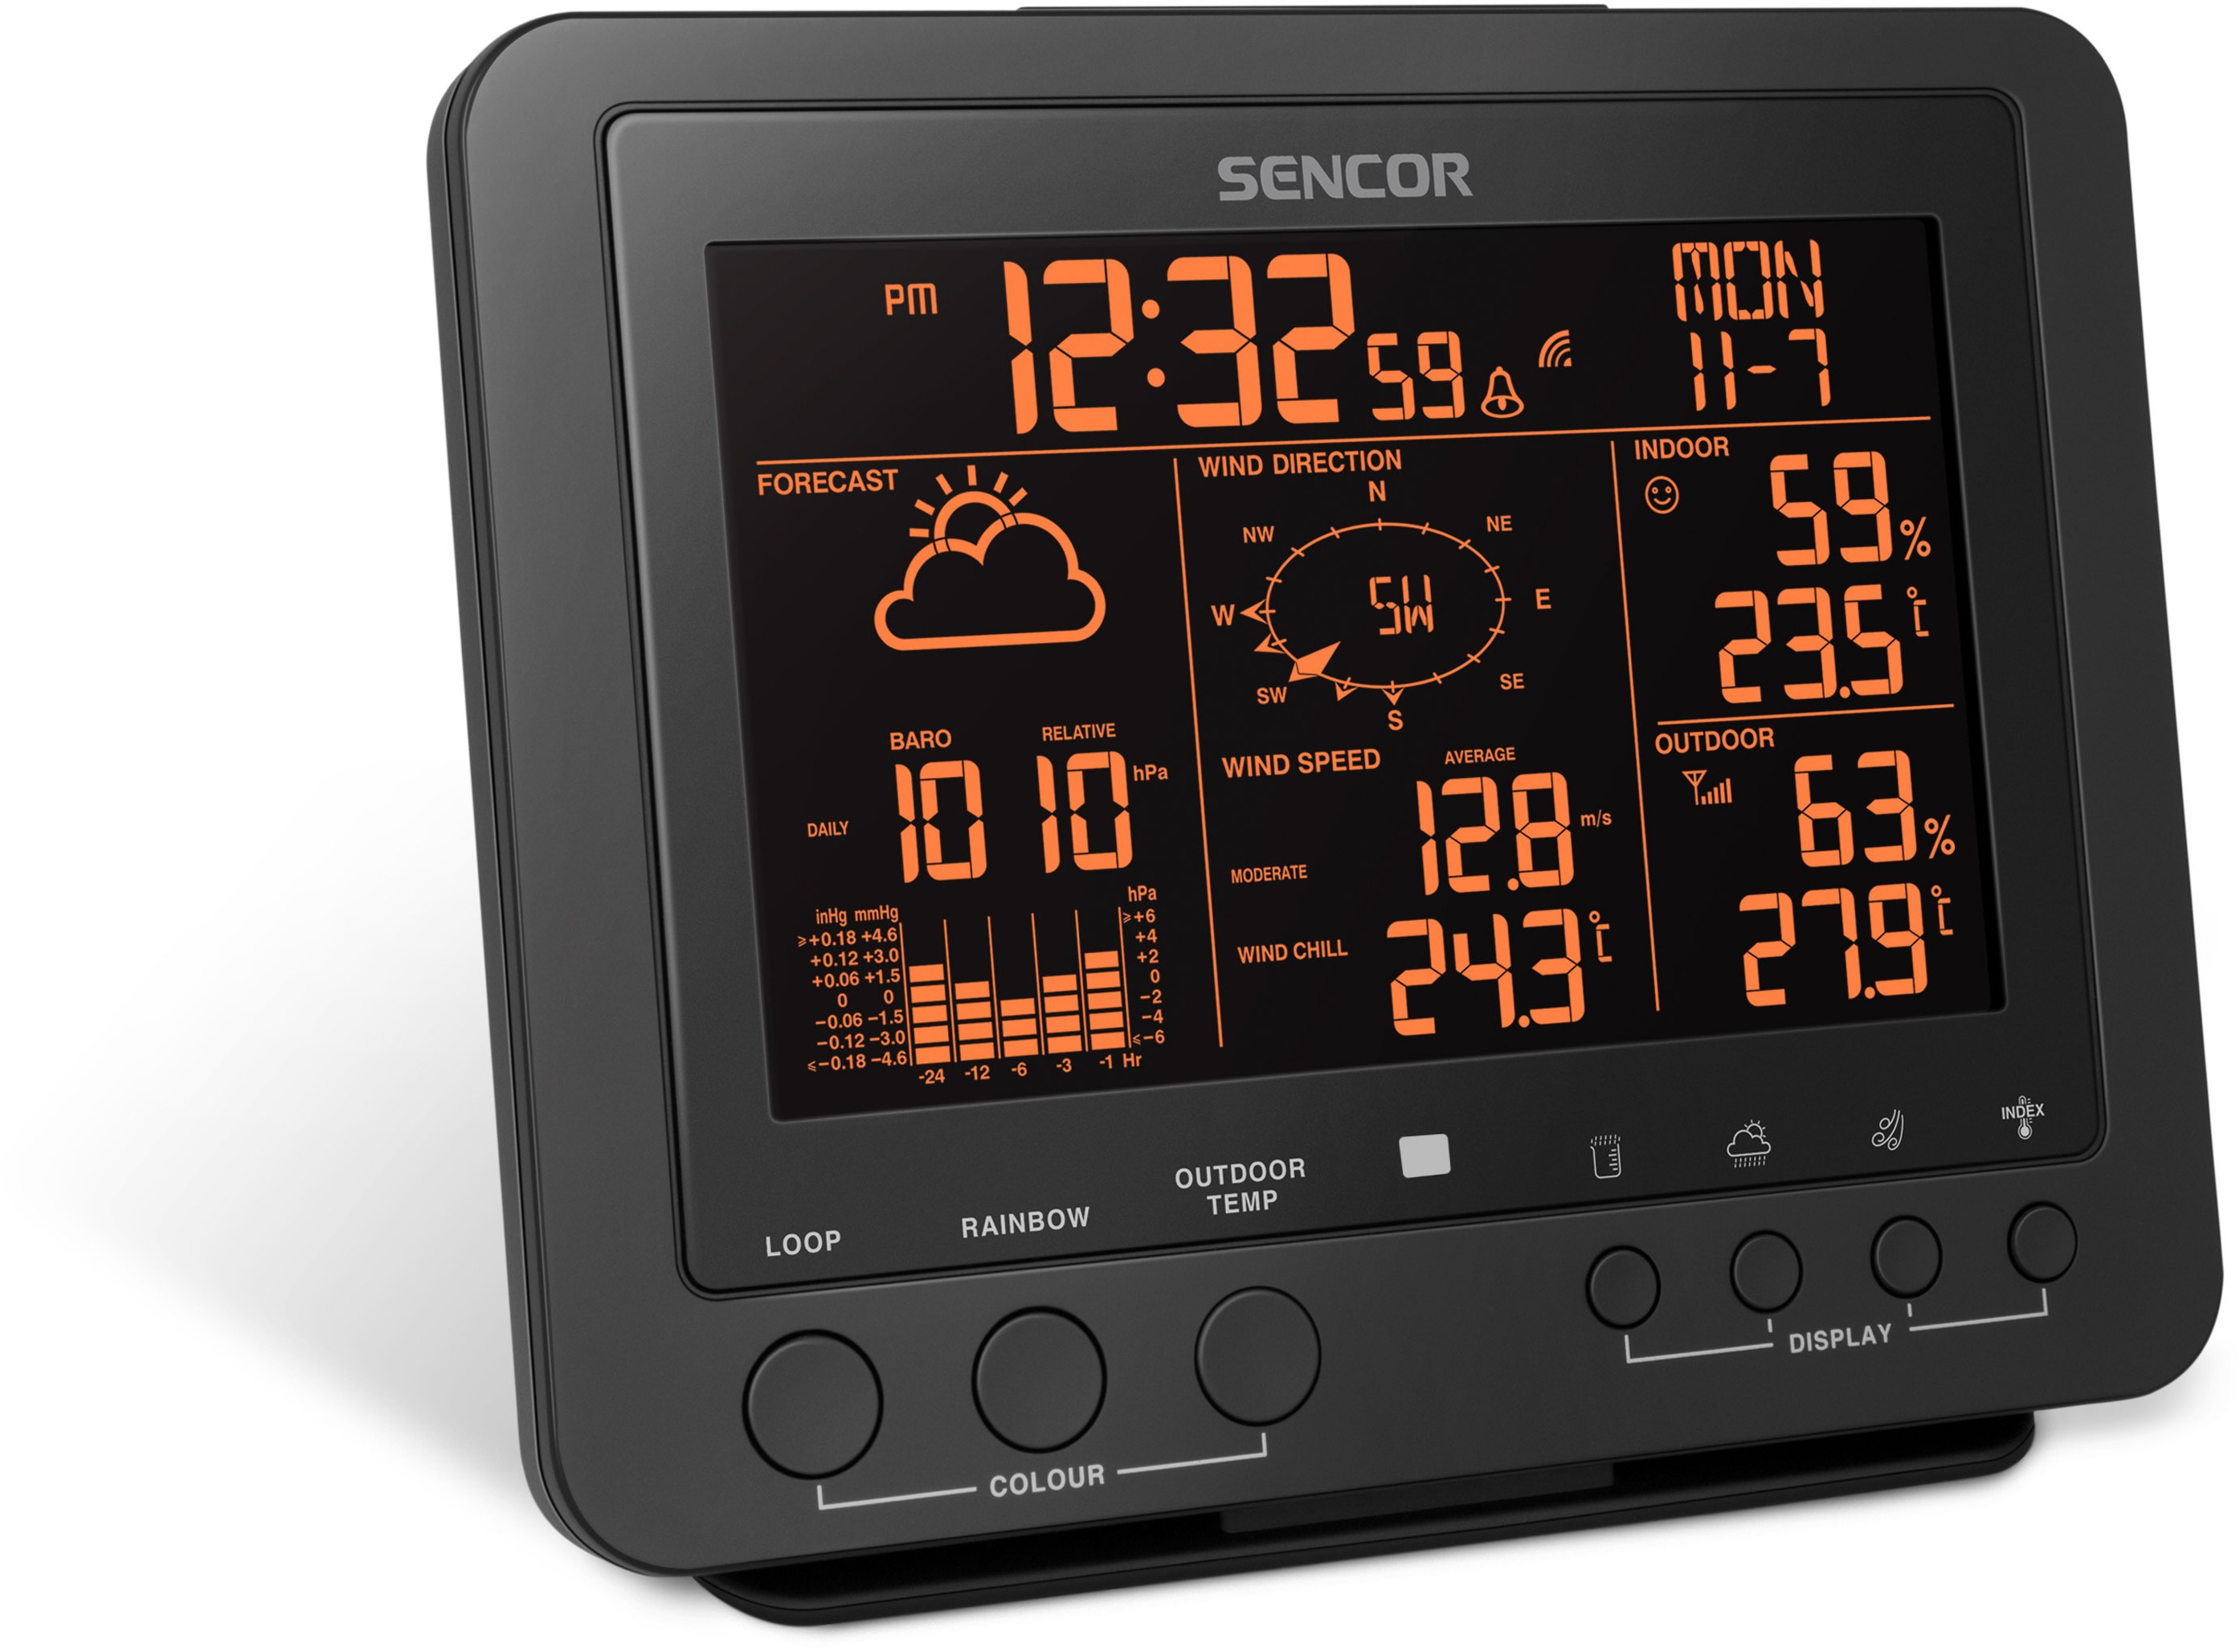 Метеостанция Sencor SWS 9700 характеристики - фотография 7